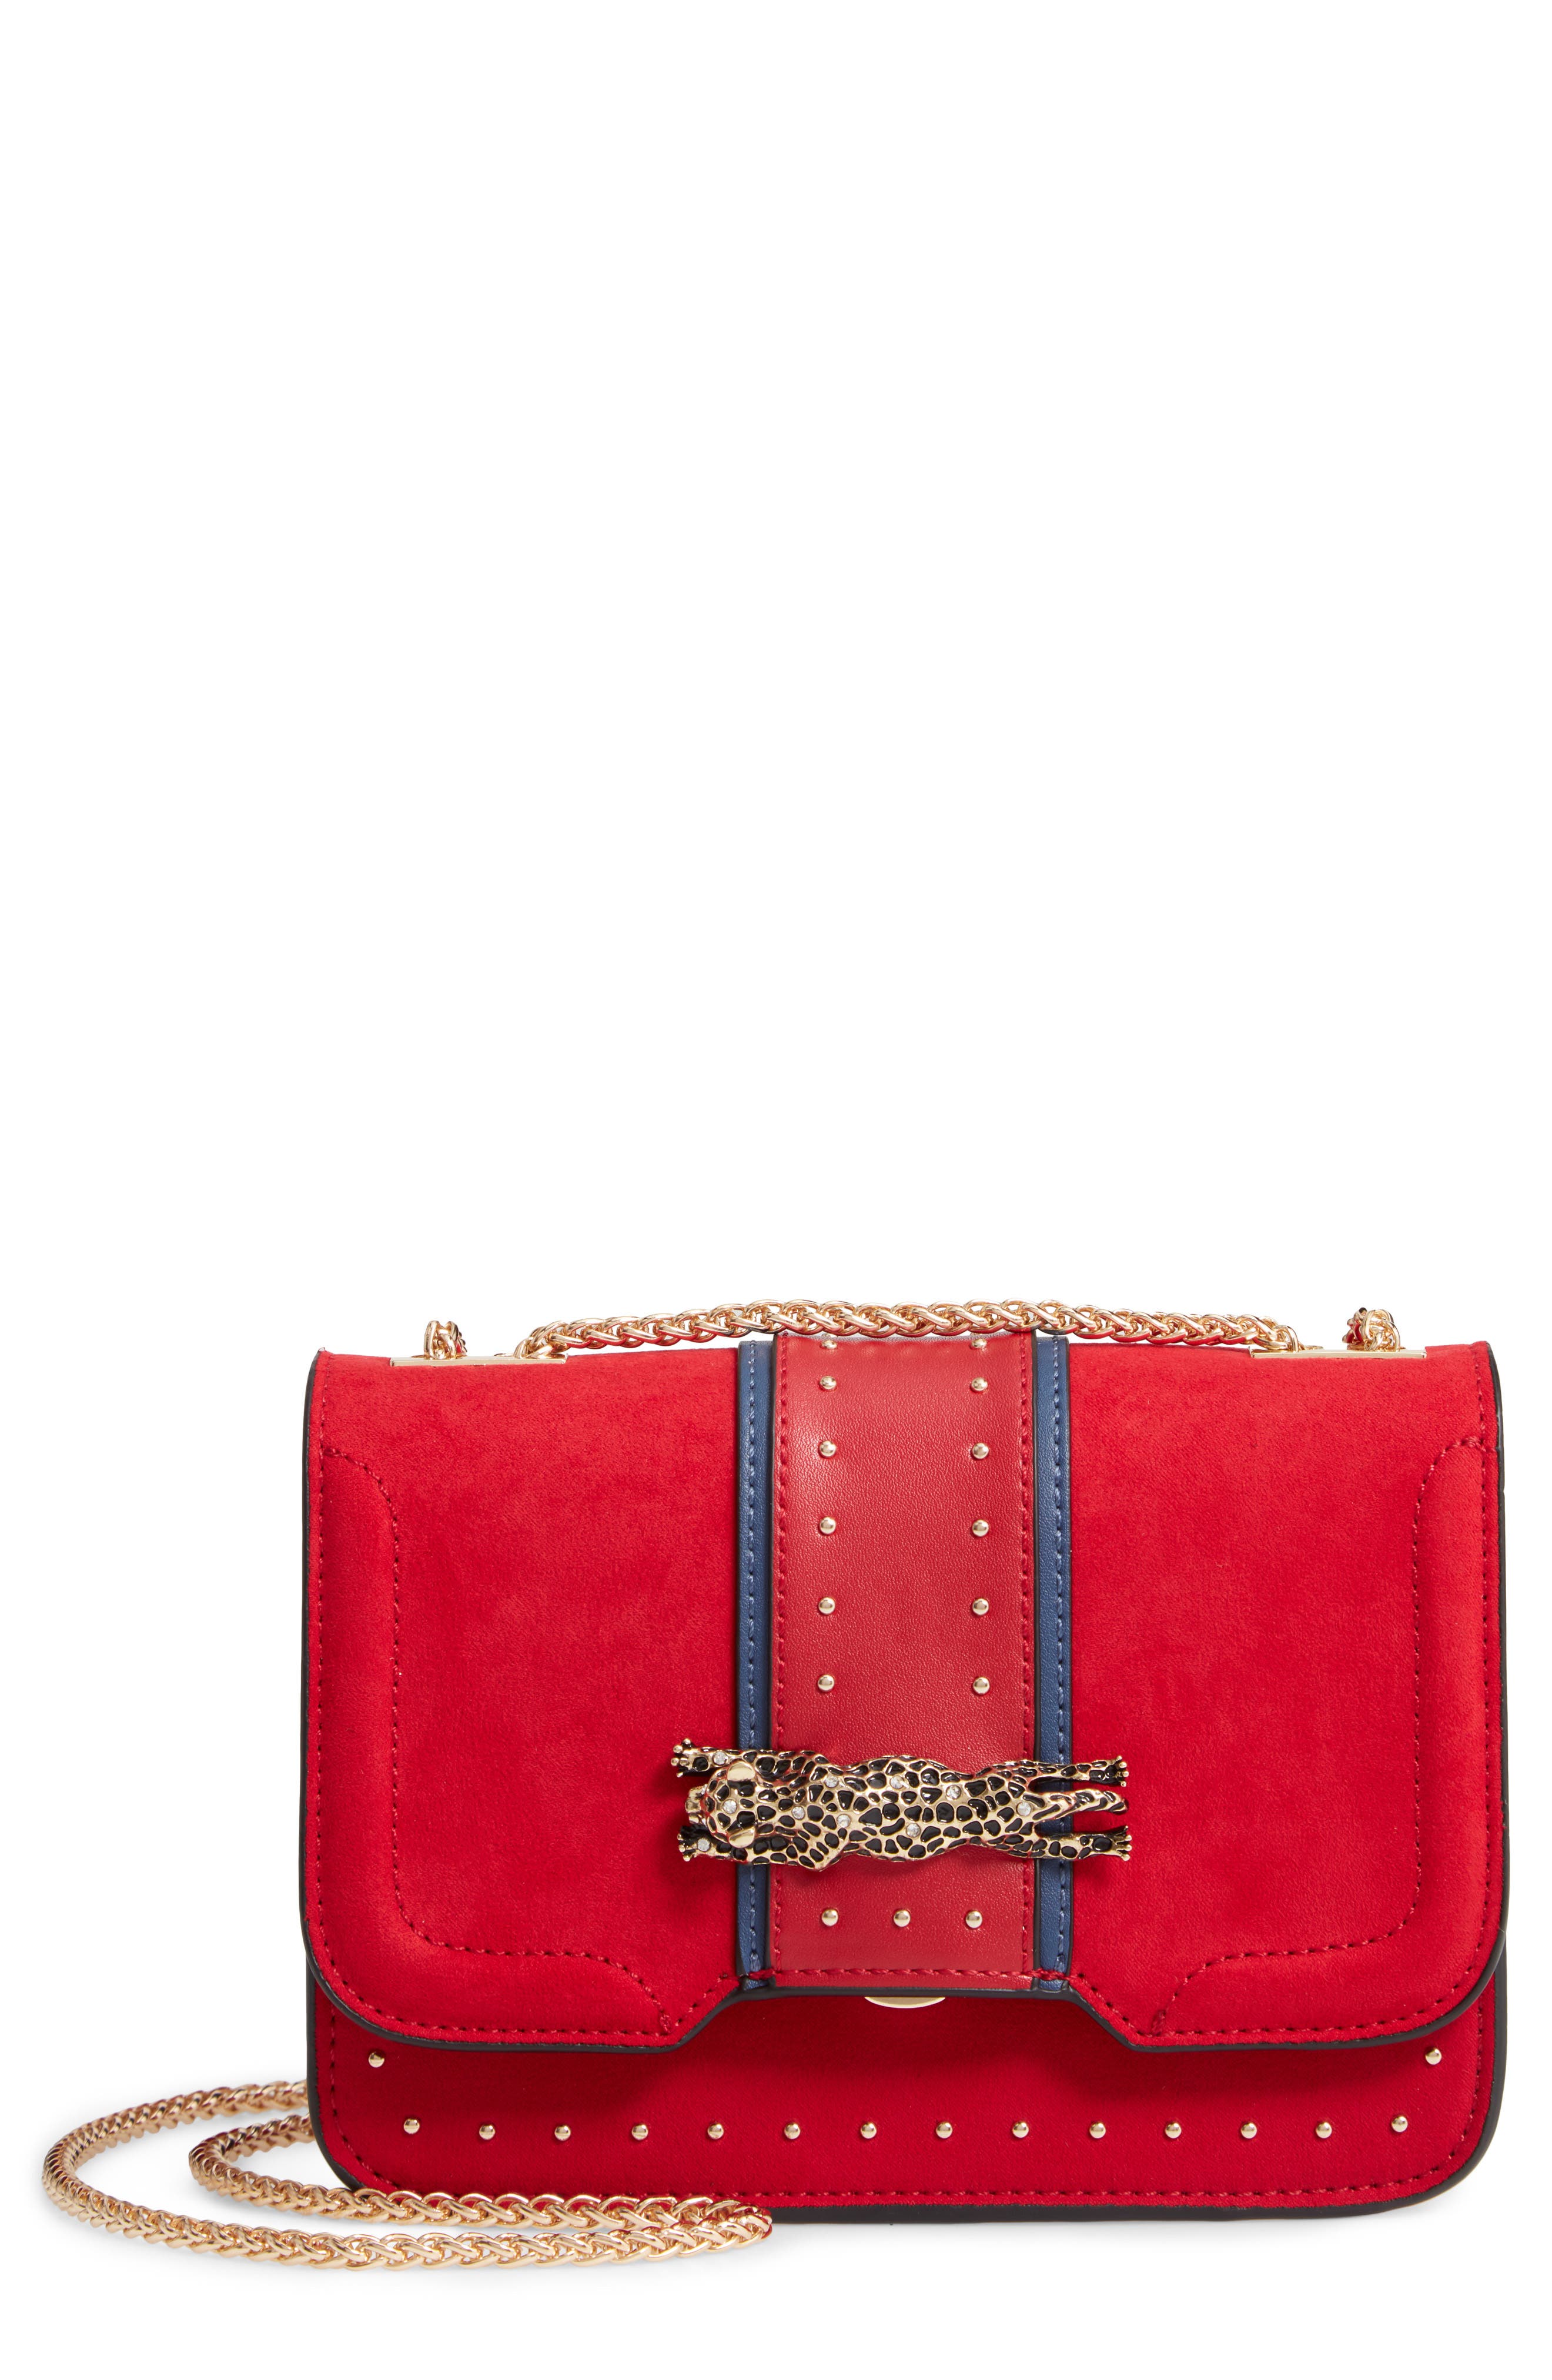 topshop red handbag